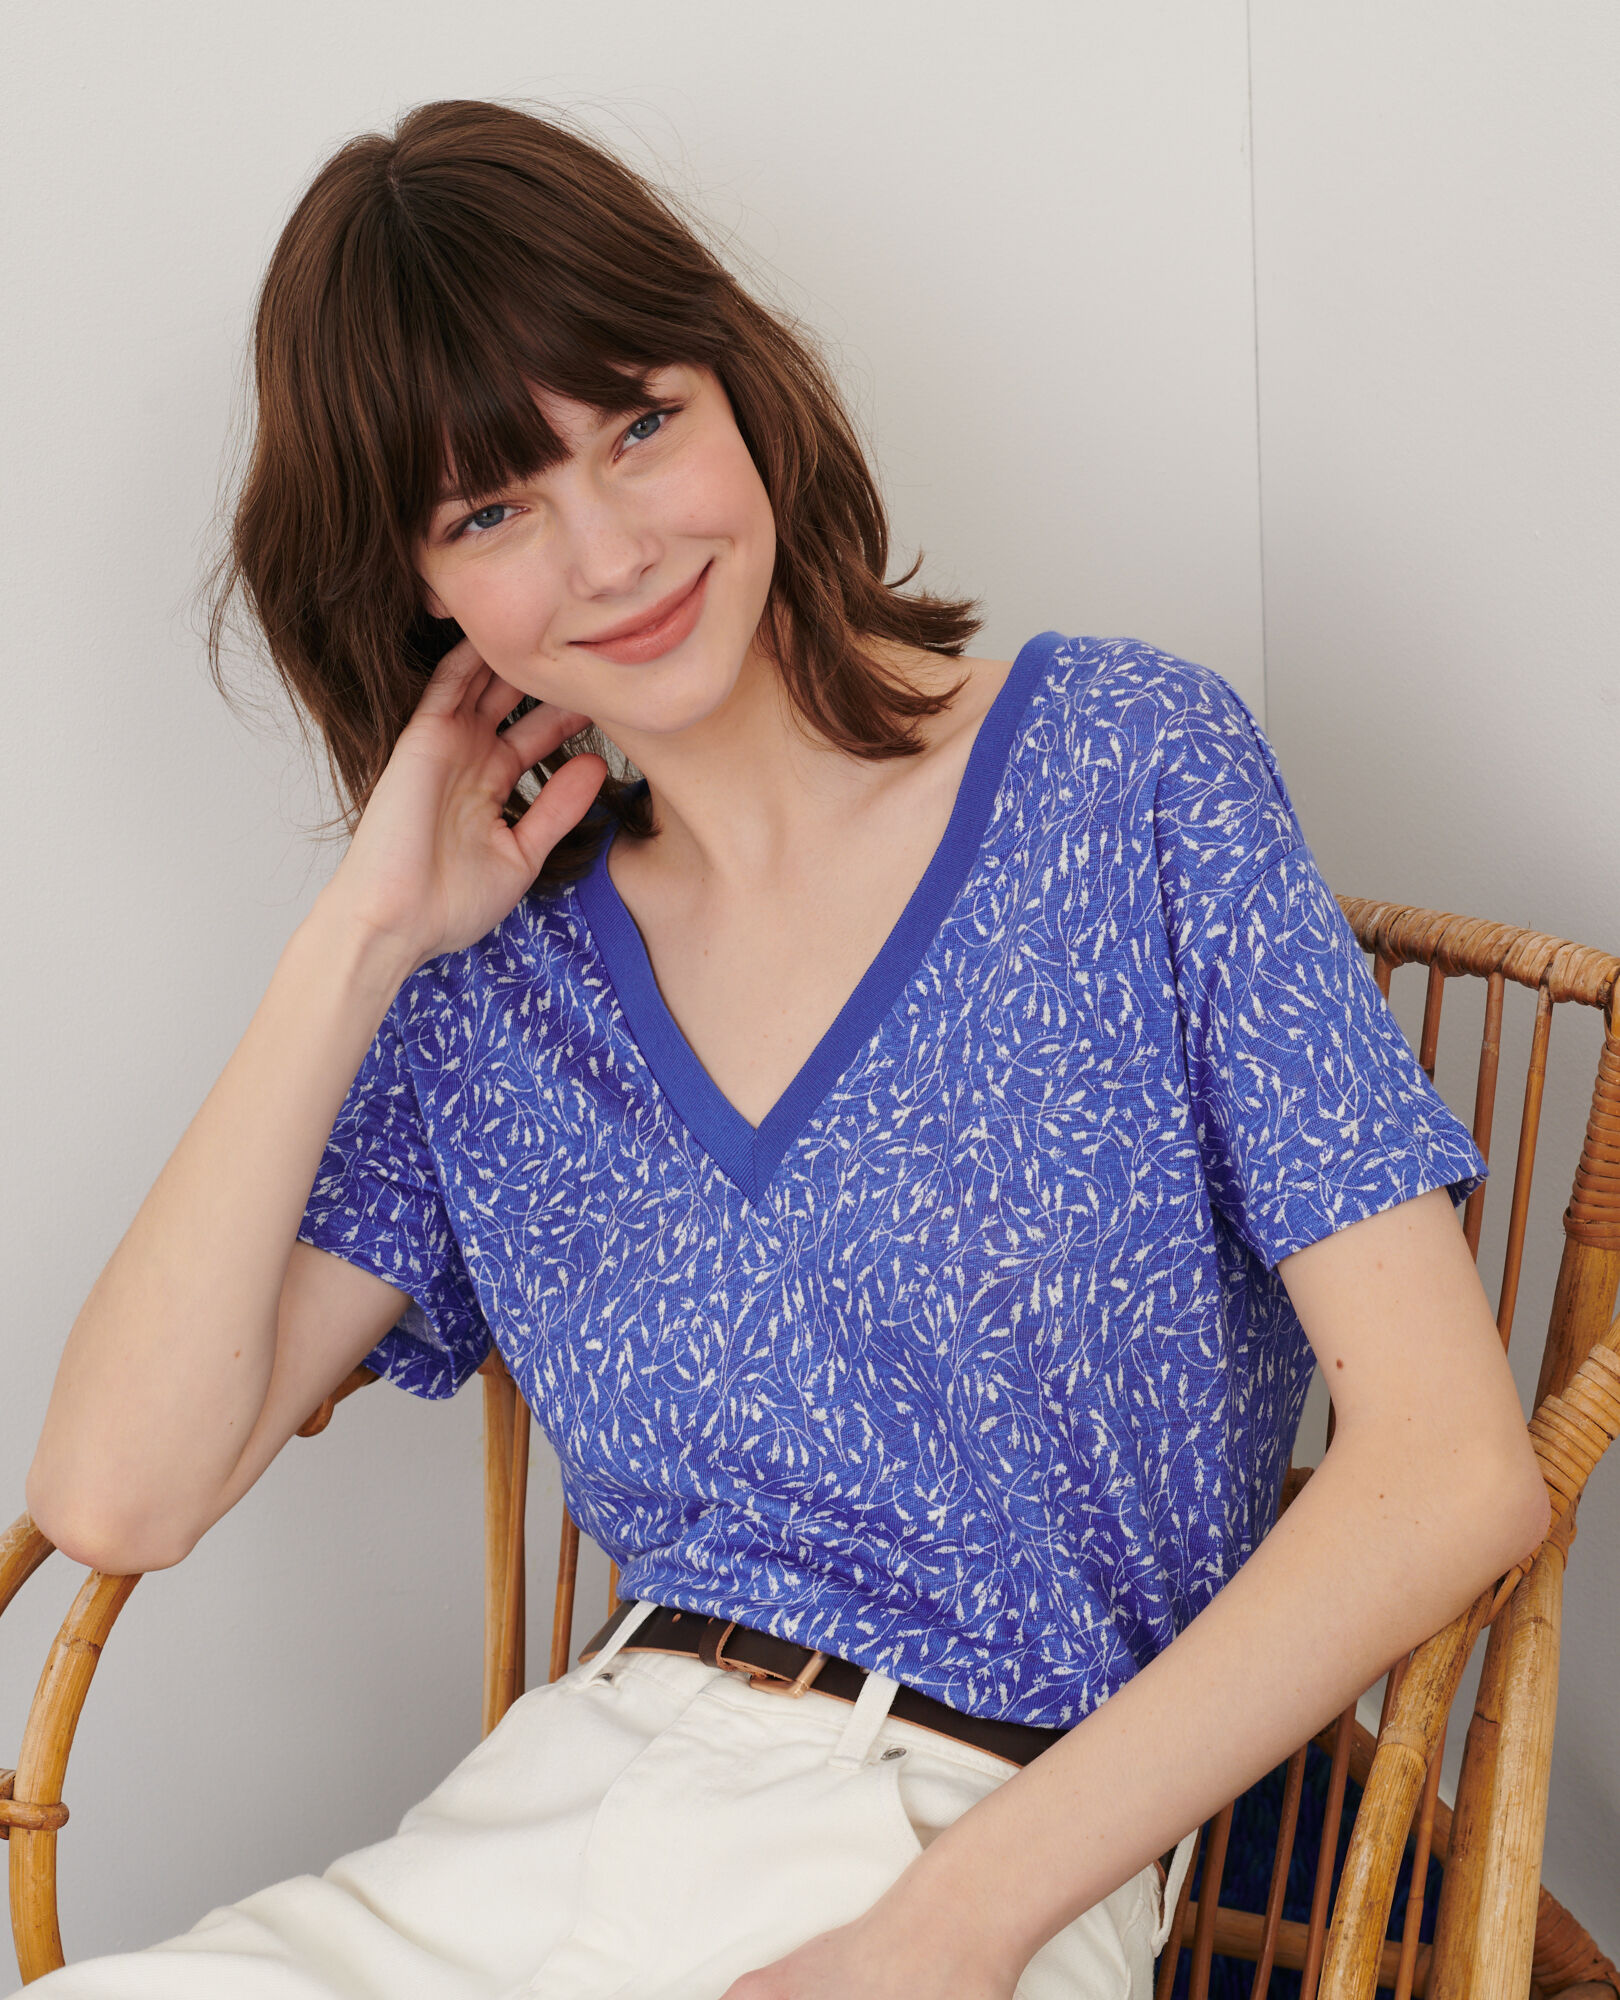 SARAH - Camiseta de lino con cuello de pico 91 print blue 2ste338f05